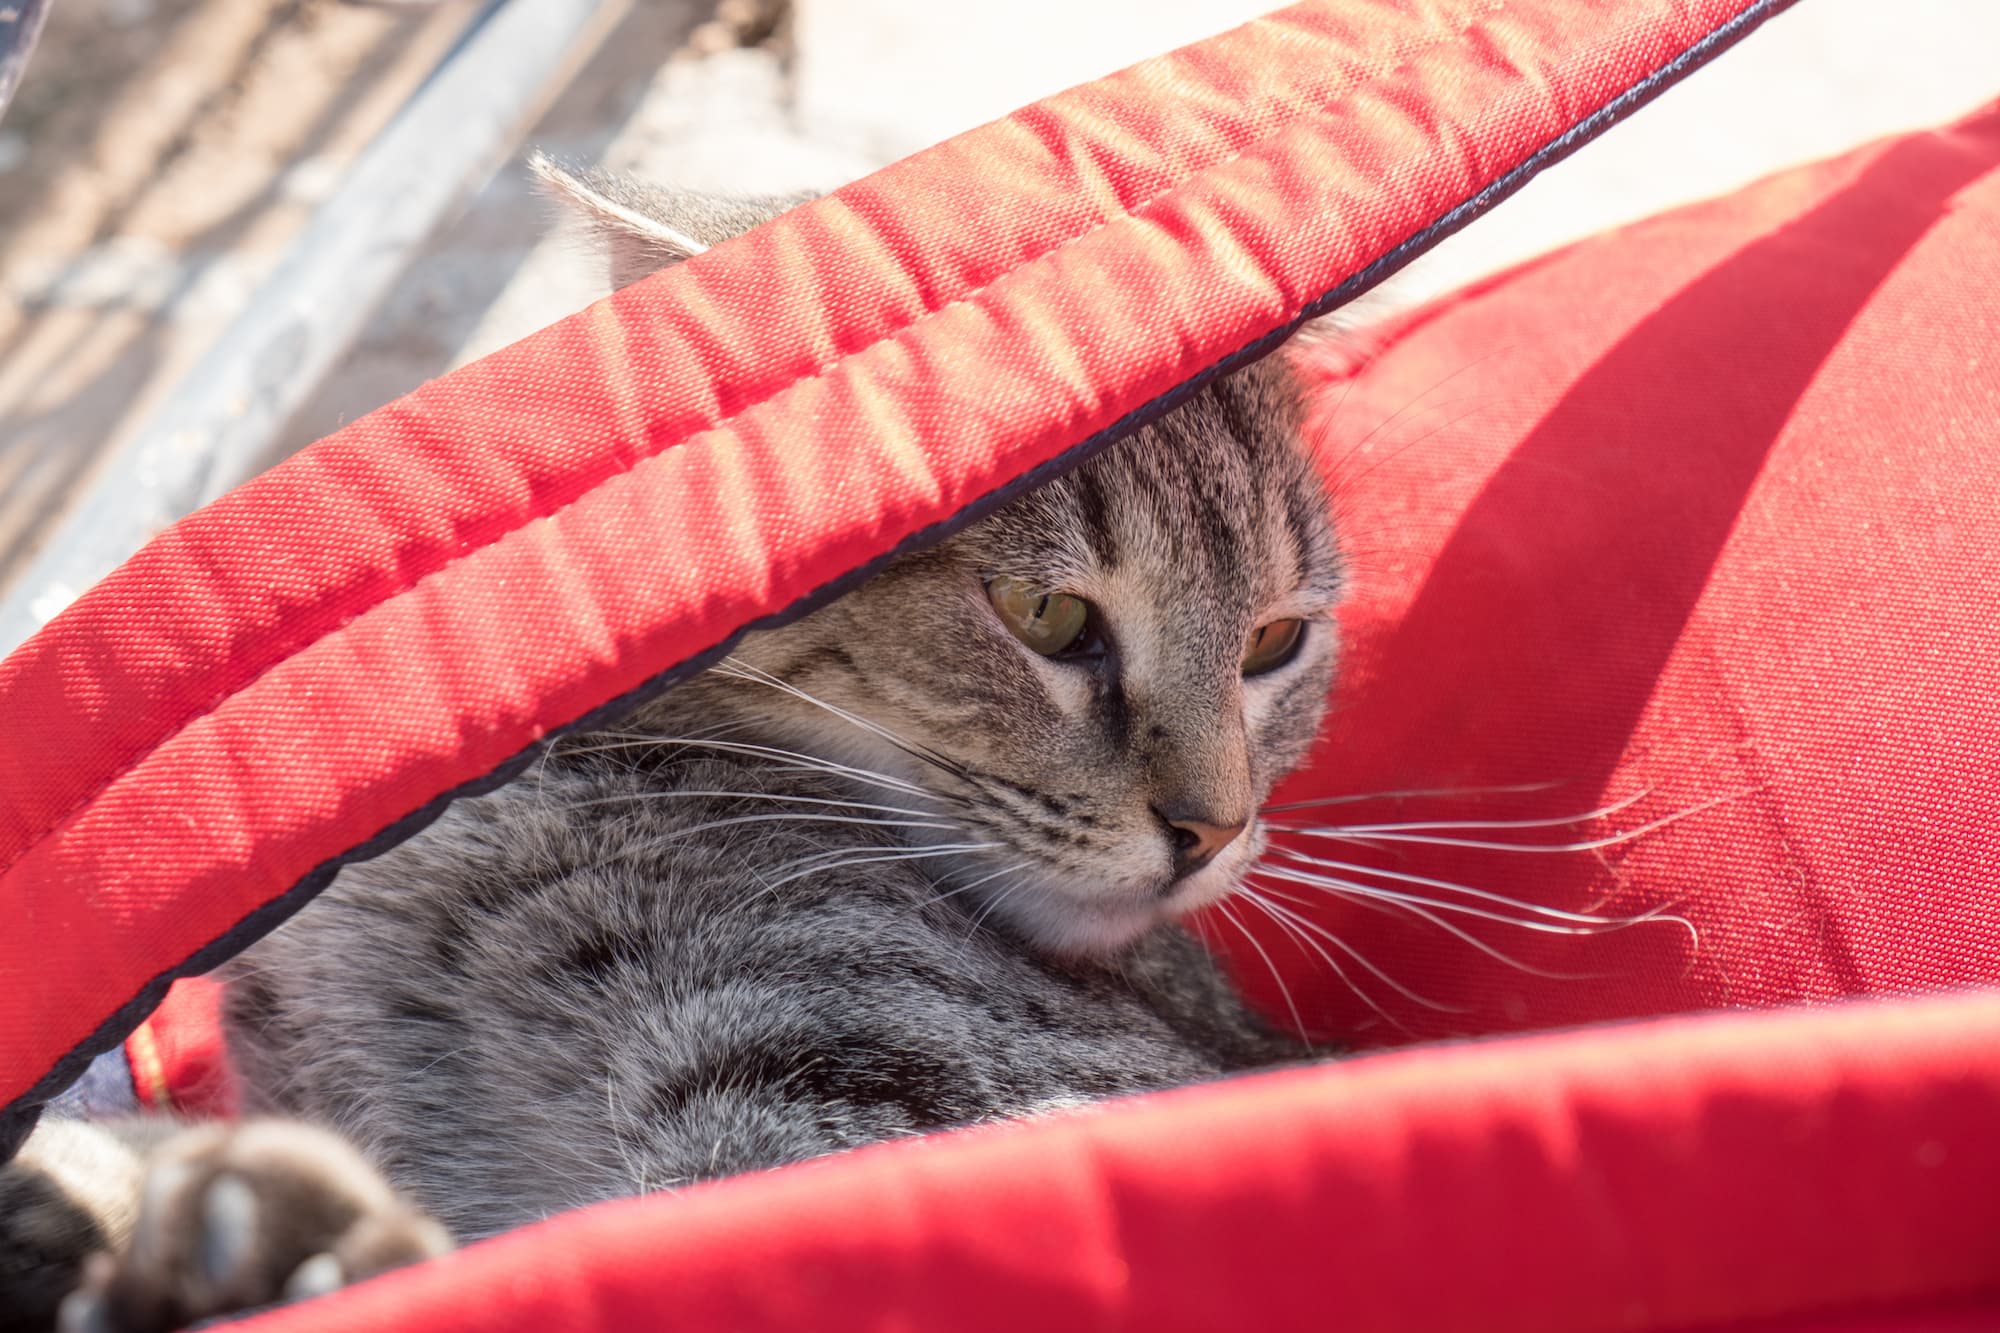 A cat curled up on Carolines rucksack in El Badi palace